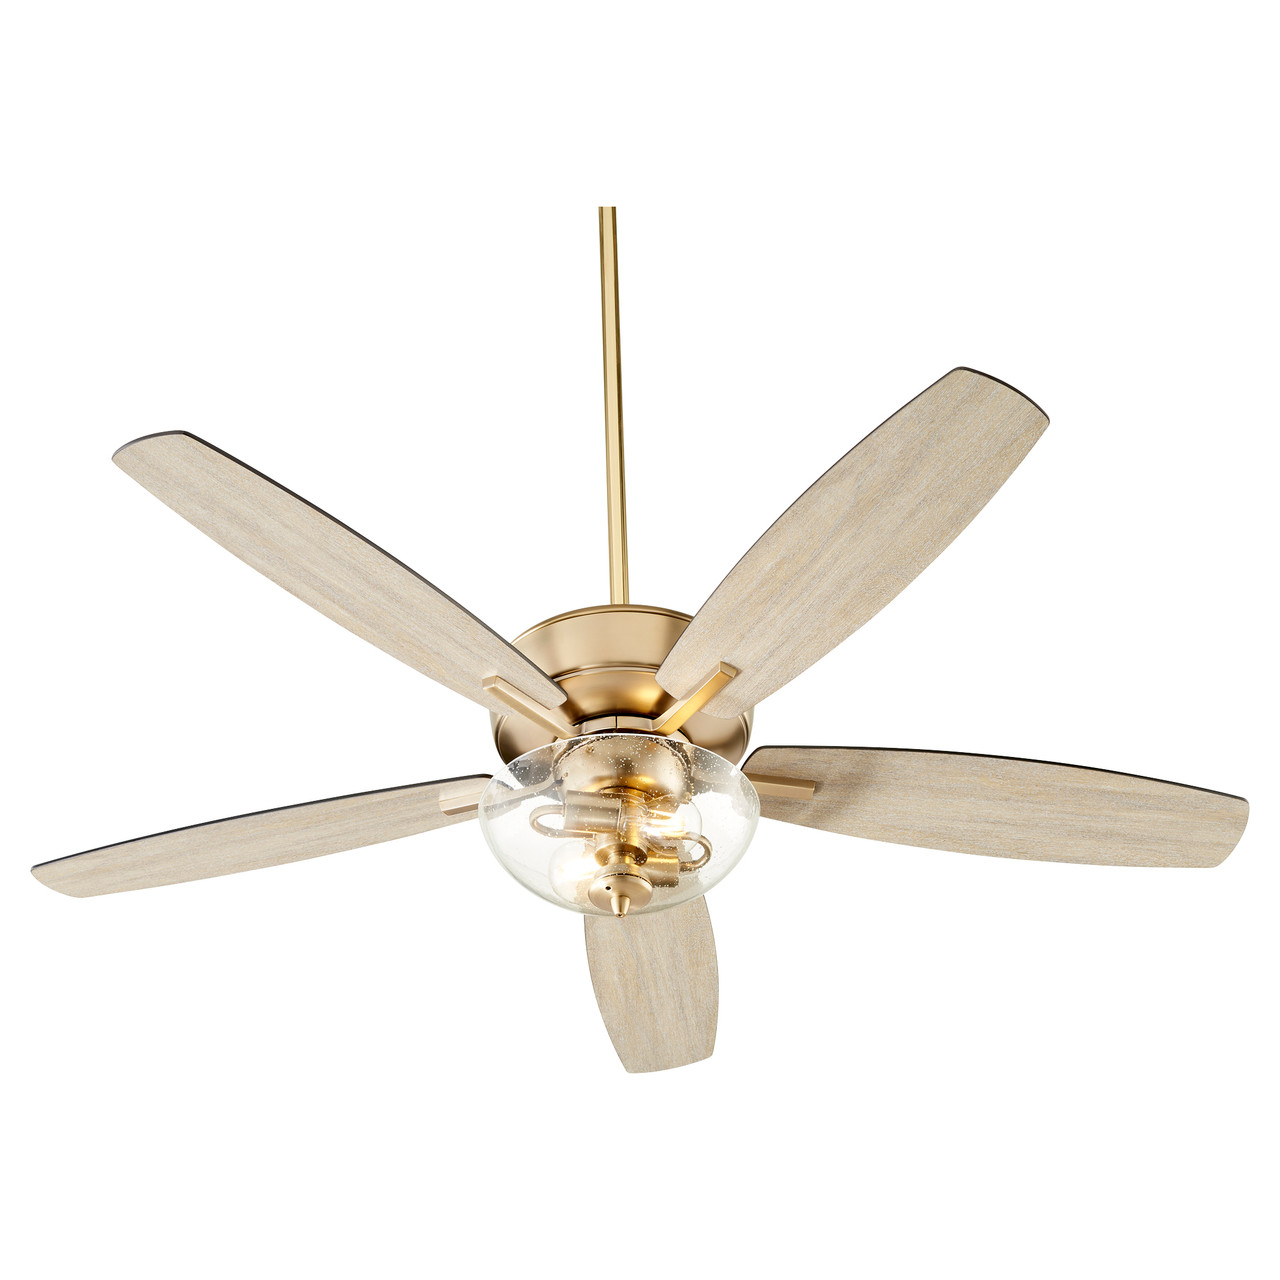 QUORUM INTERNATIONAL 7052-280 Breeze 2-Light Ceiling Fan, Aged Brass